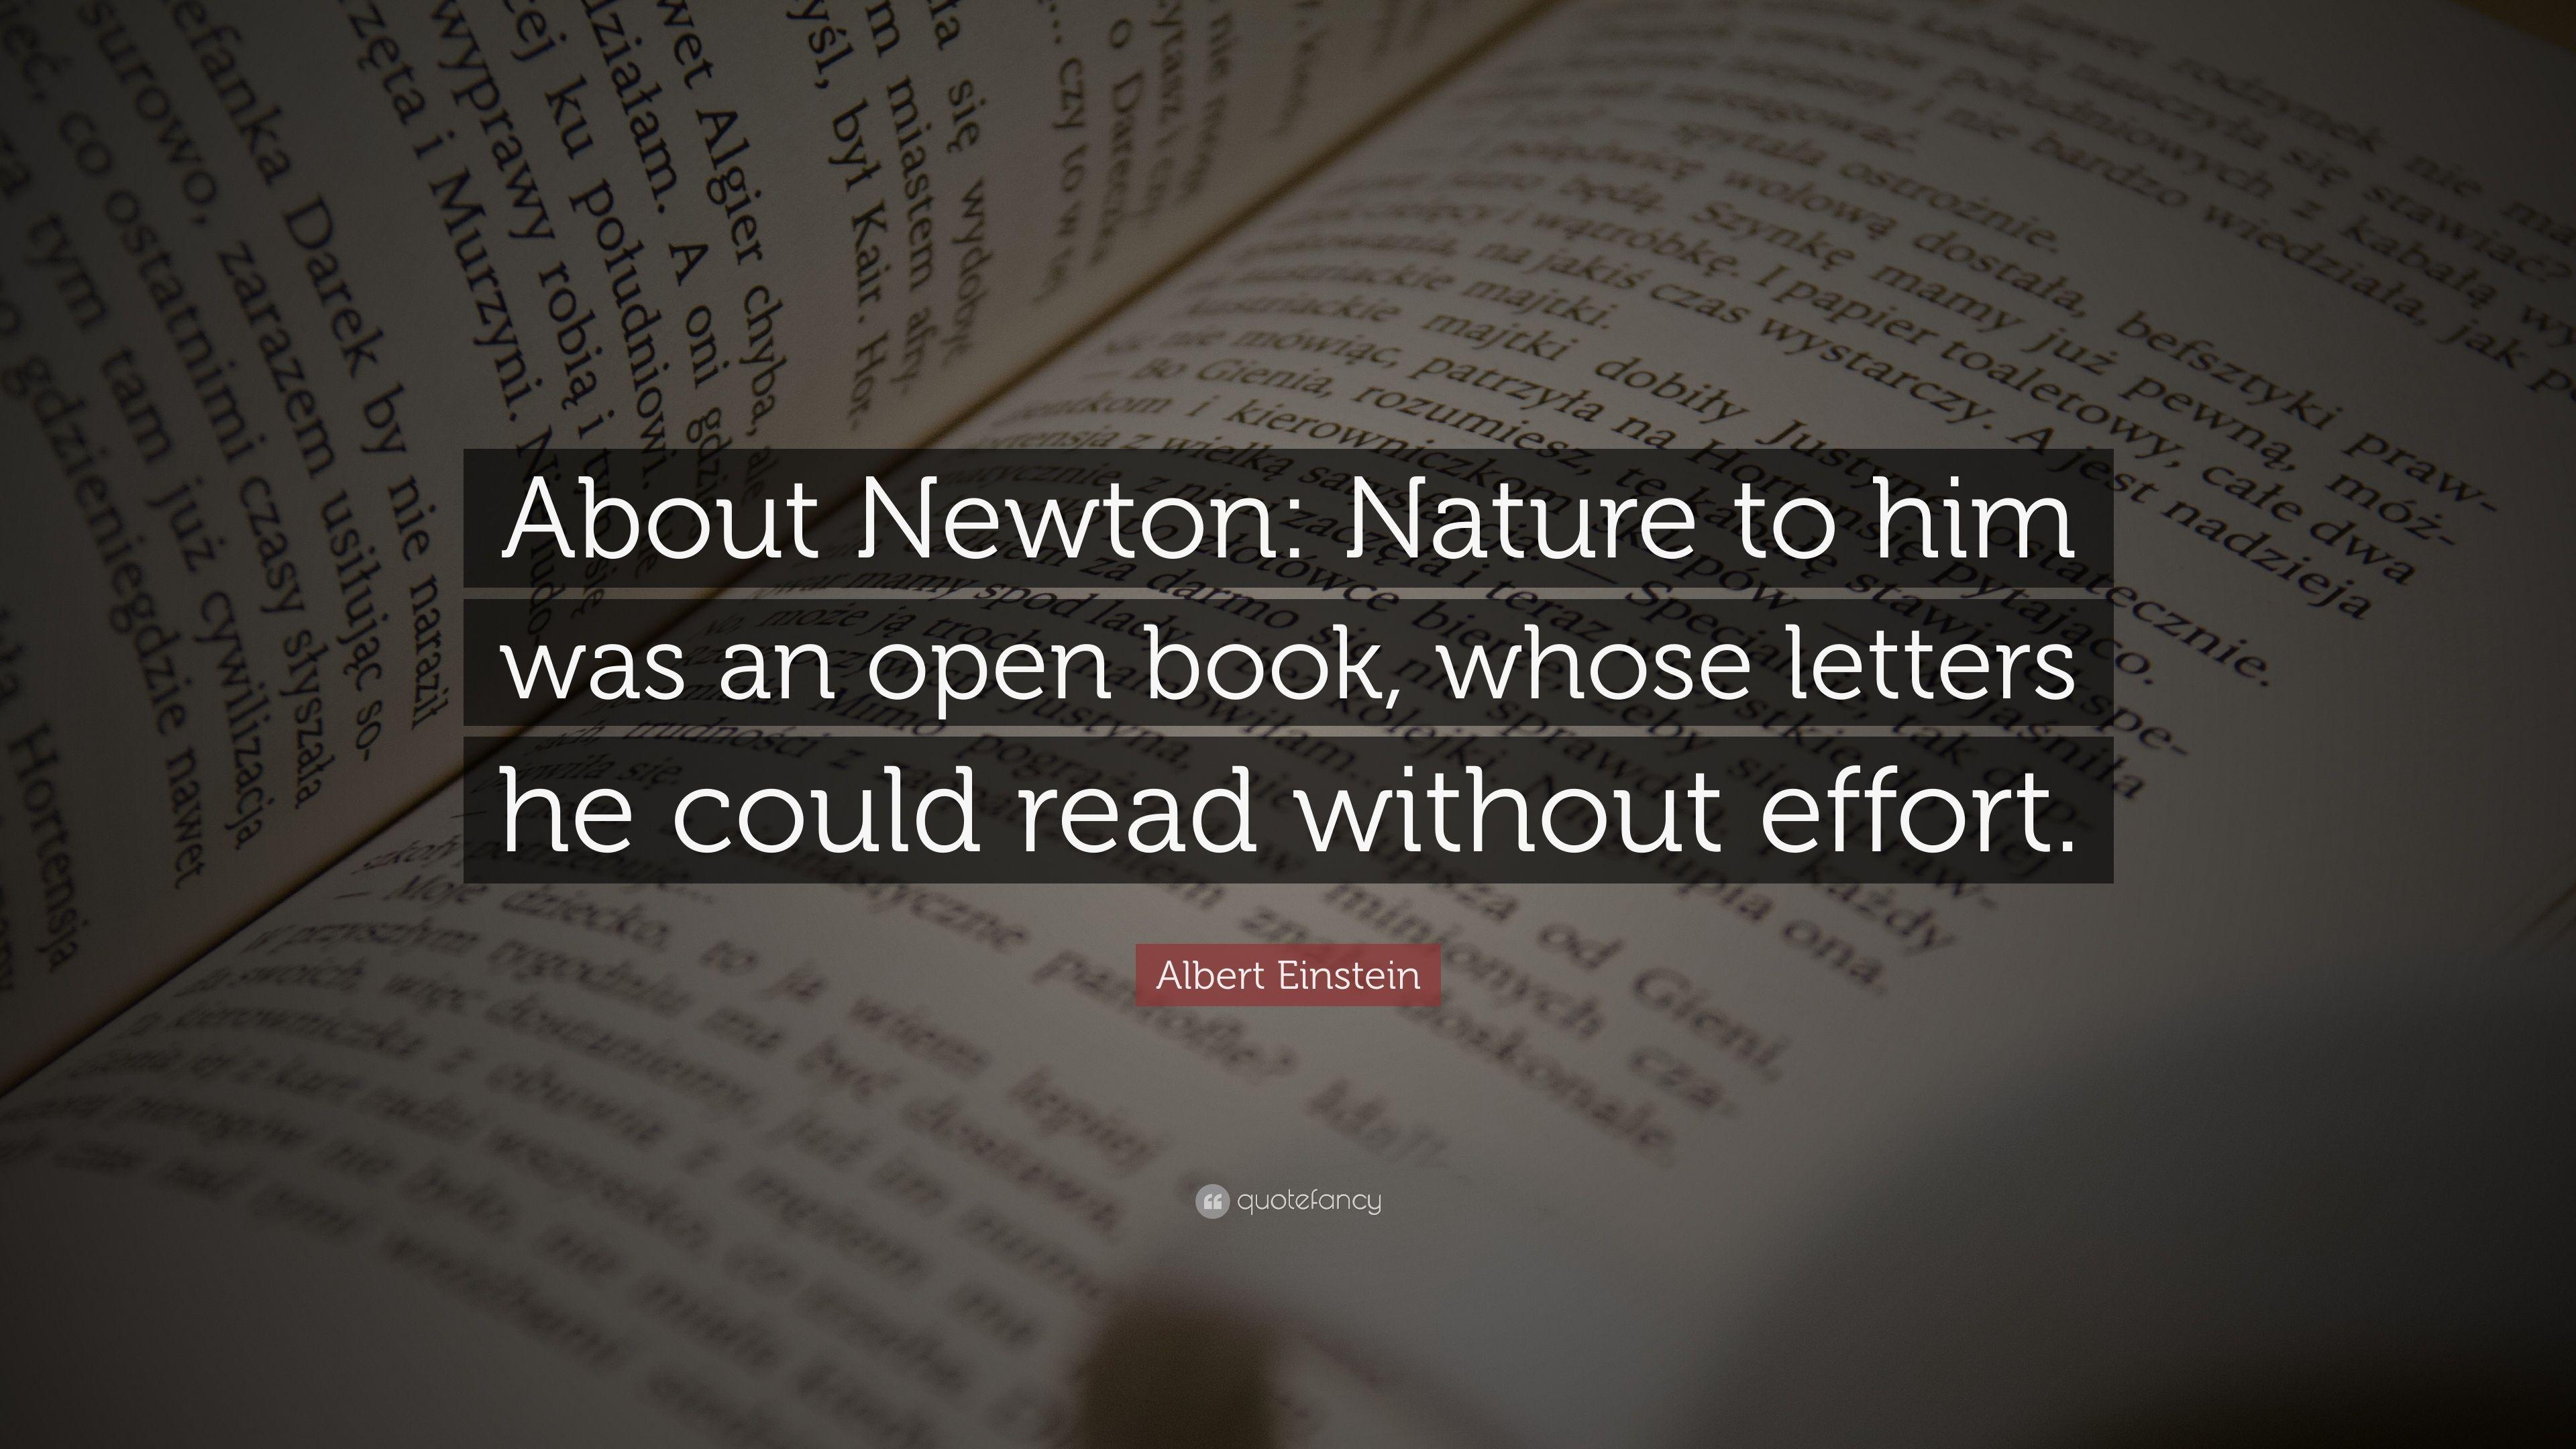 Albert Einstein Quote: “About Newton: Nature to him was an open book